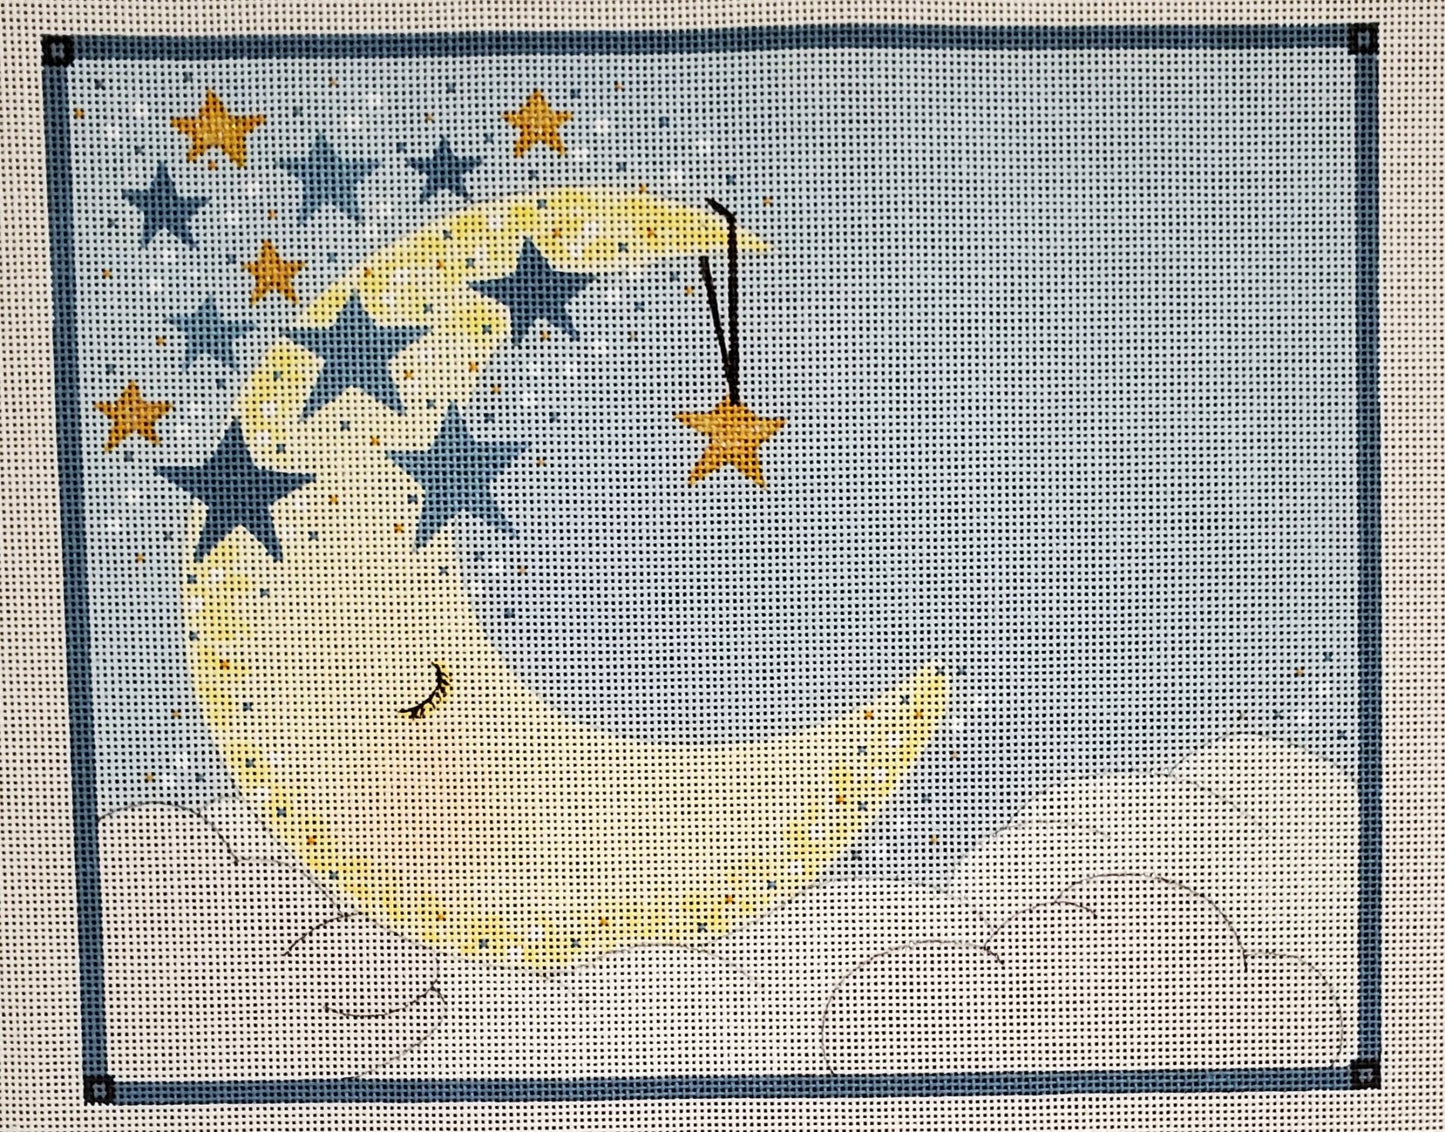 Sleeping Moon - The Flying Needles